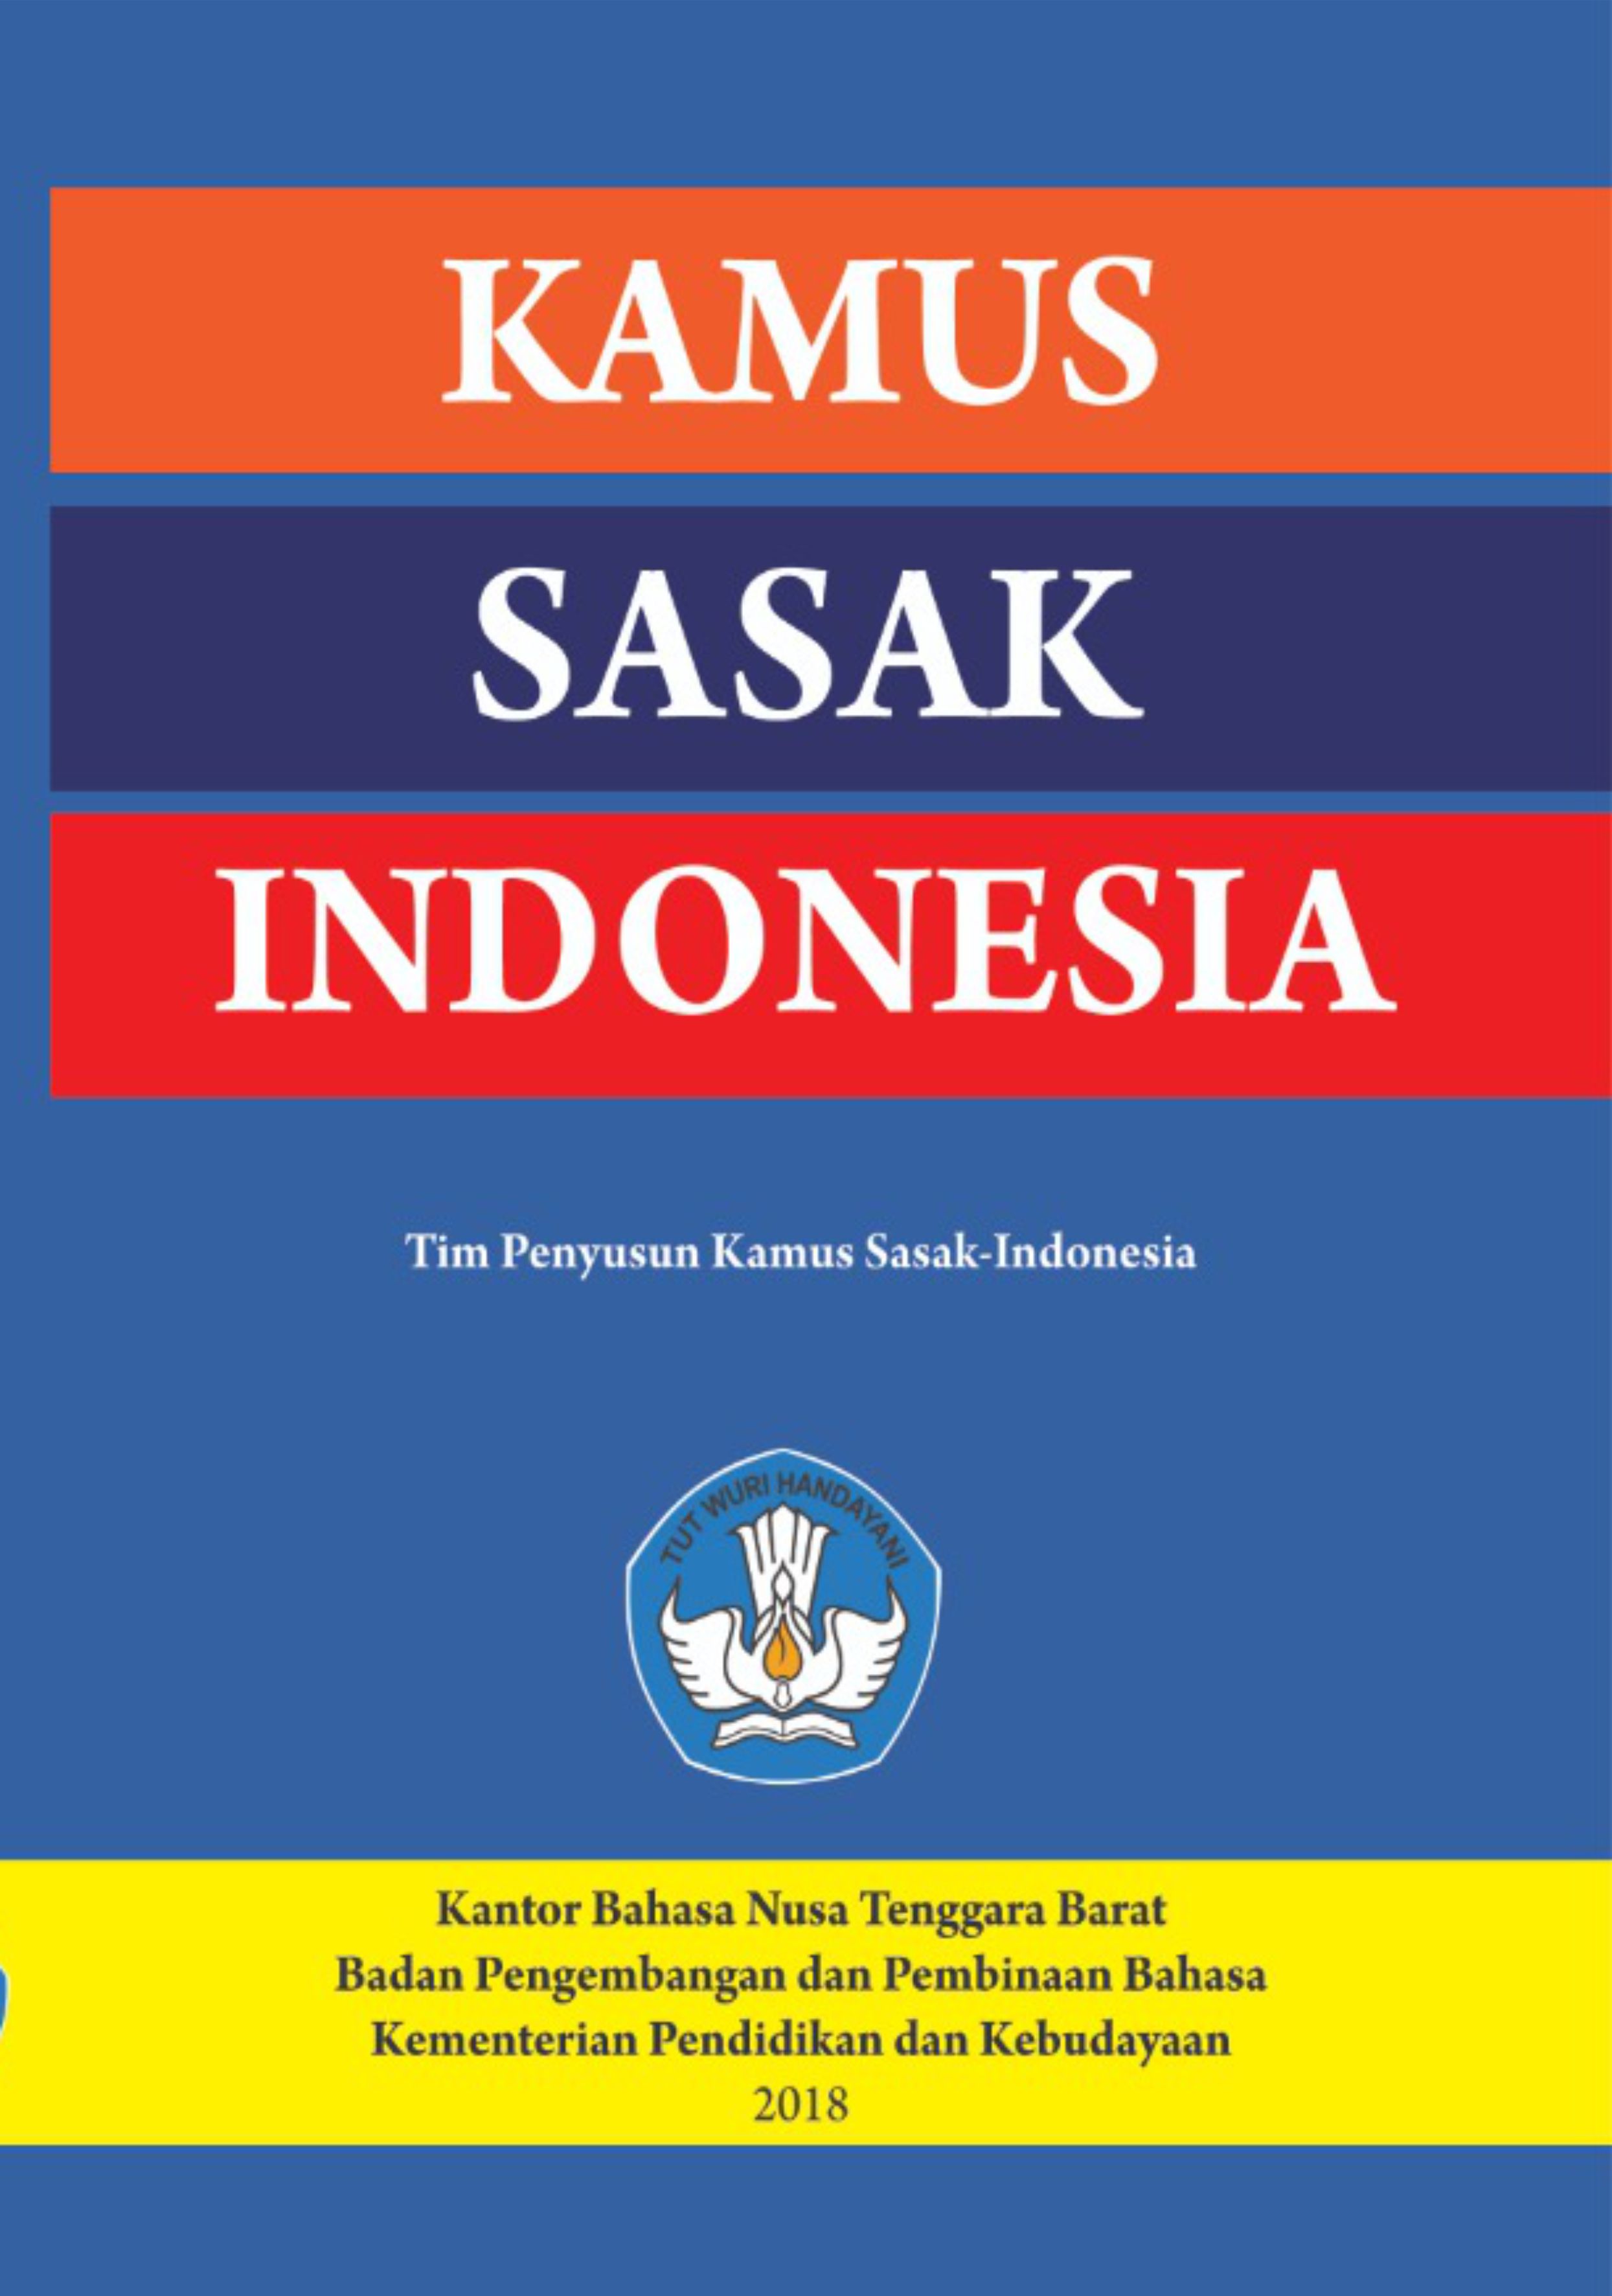 KAMUS SASAK INDONESIA